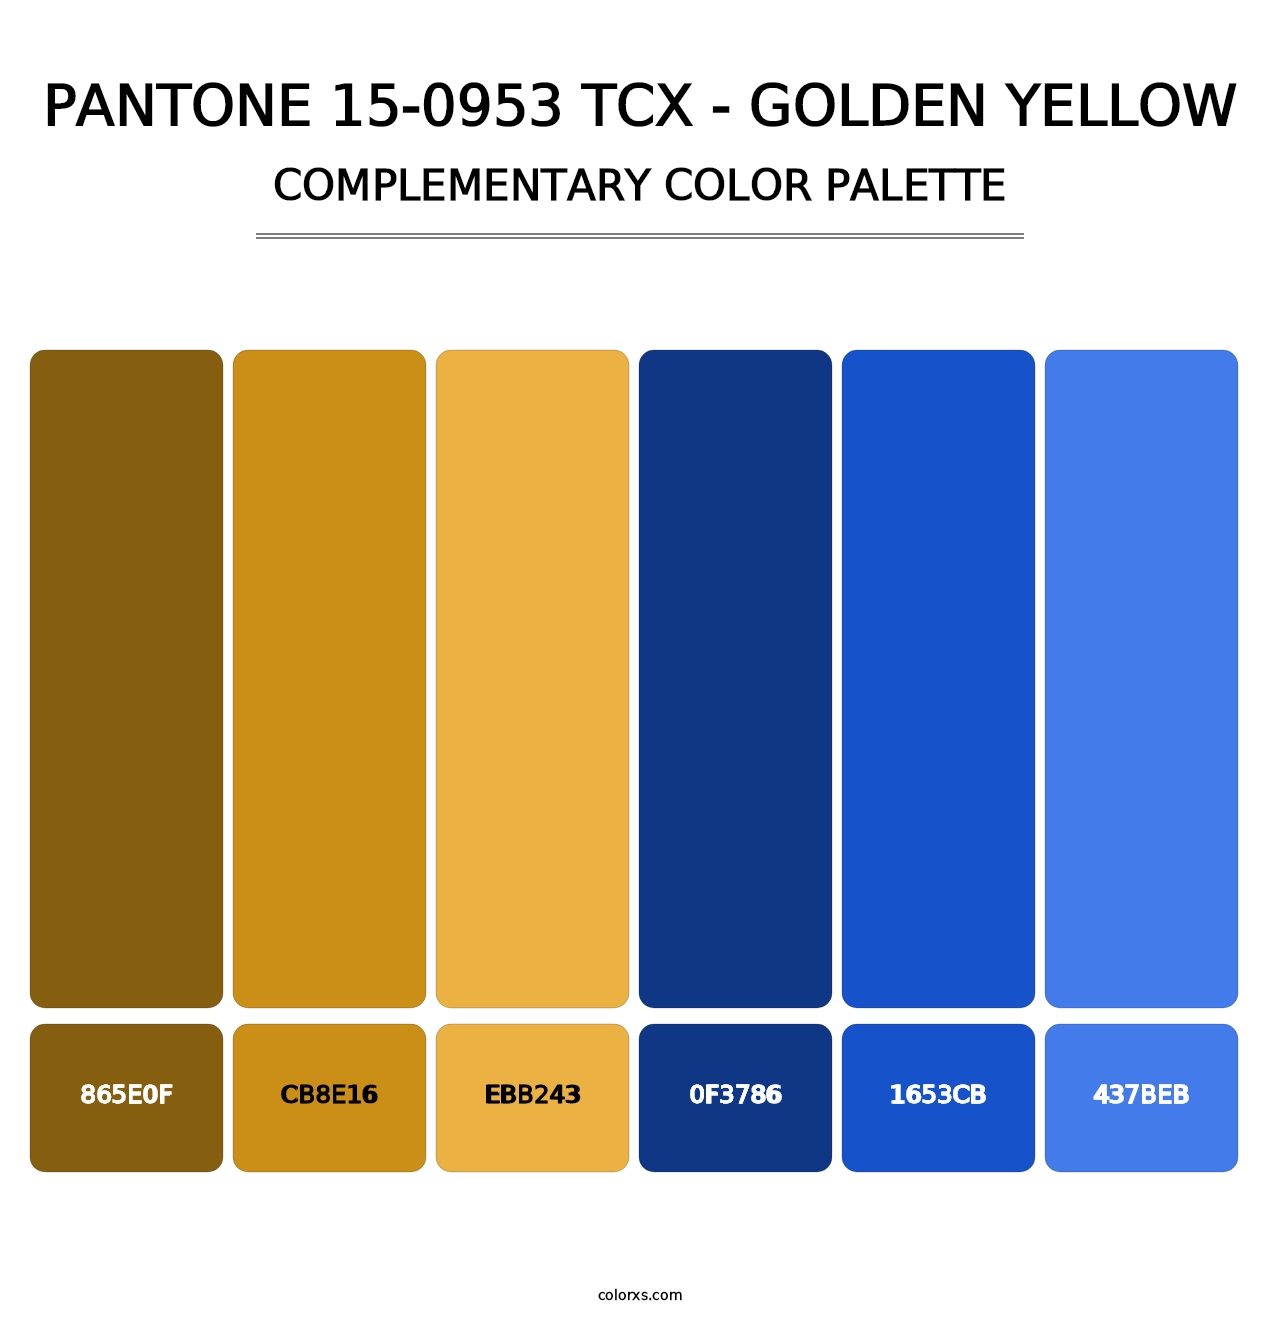 PANTONE 15-0953 TCX - Golden Yellow - Complementary Color Palette